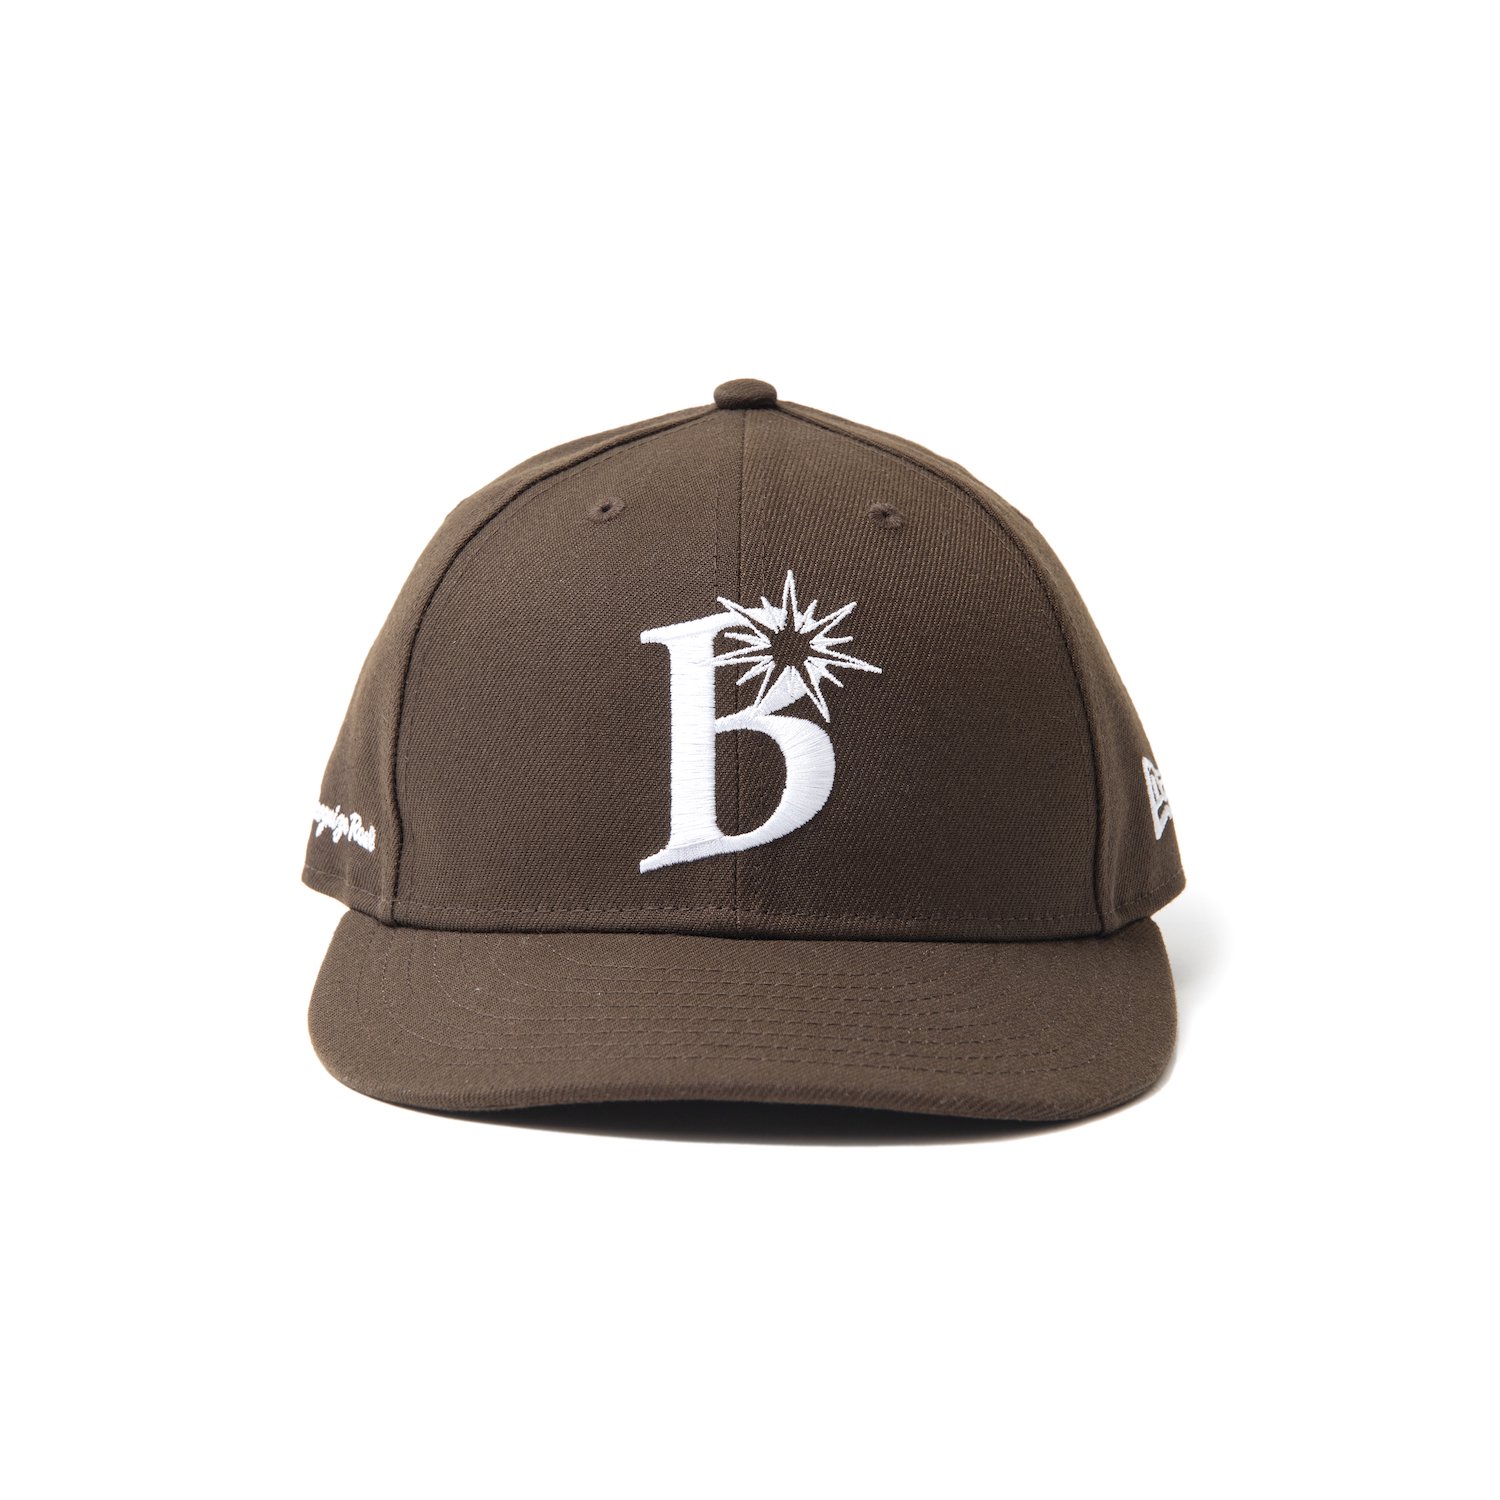 新品】BoTT×NEWERA B Logo NEW ERA Cap『NAVY』bott - morahiking.com